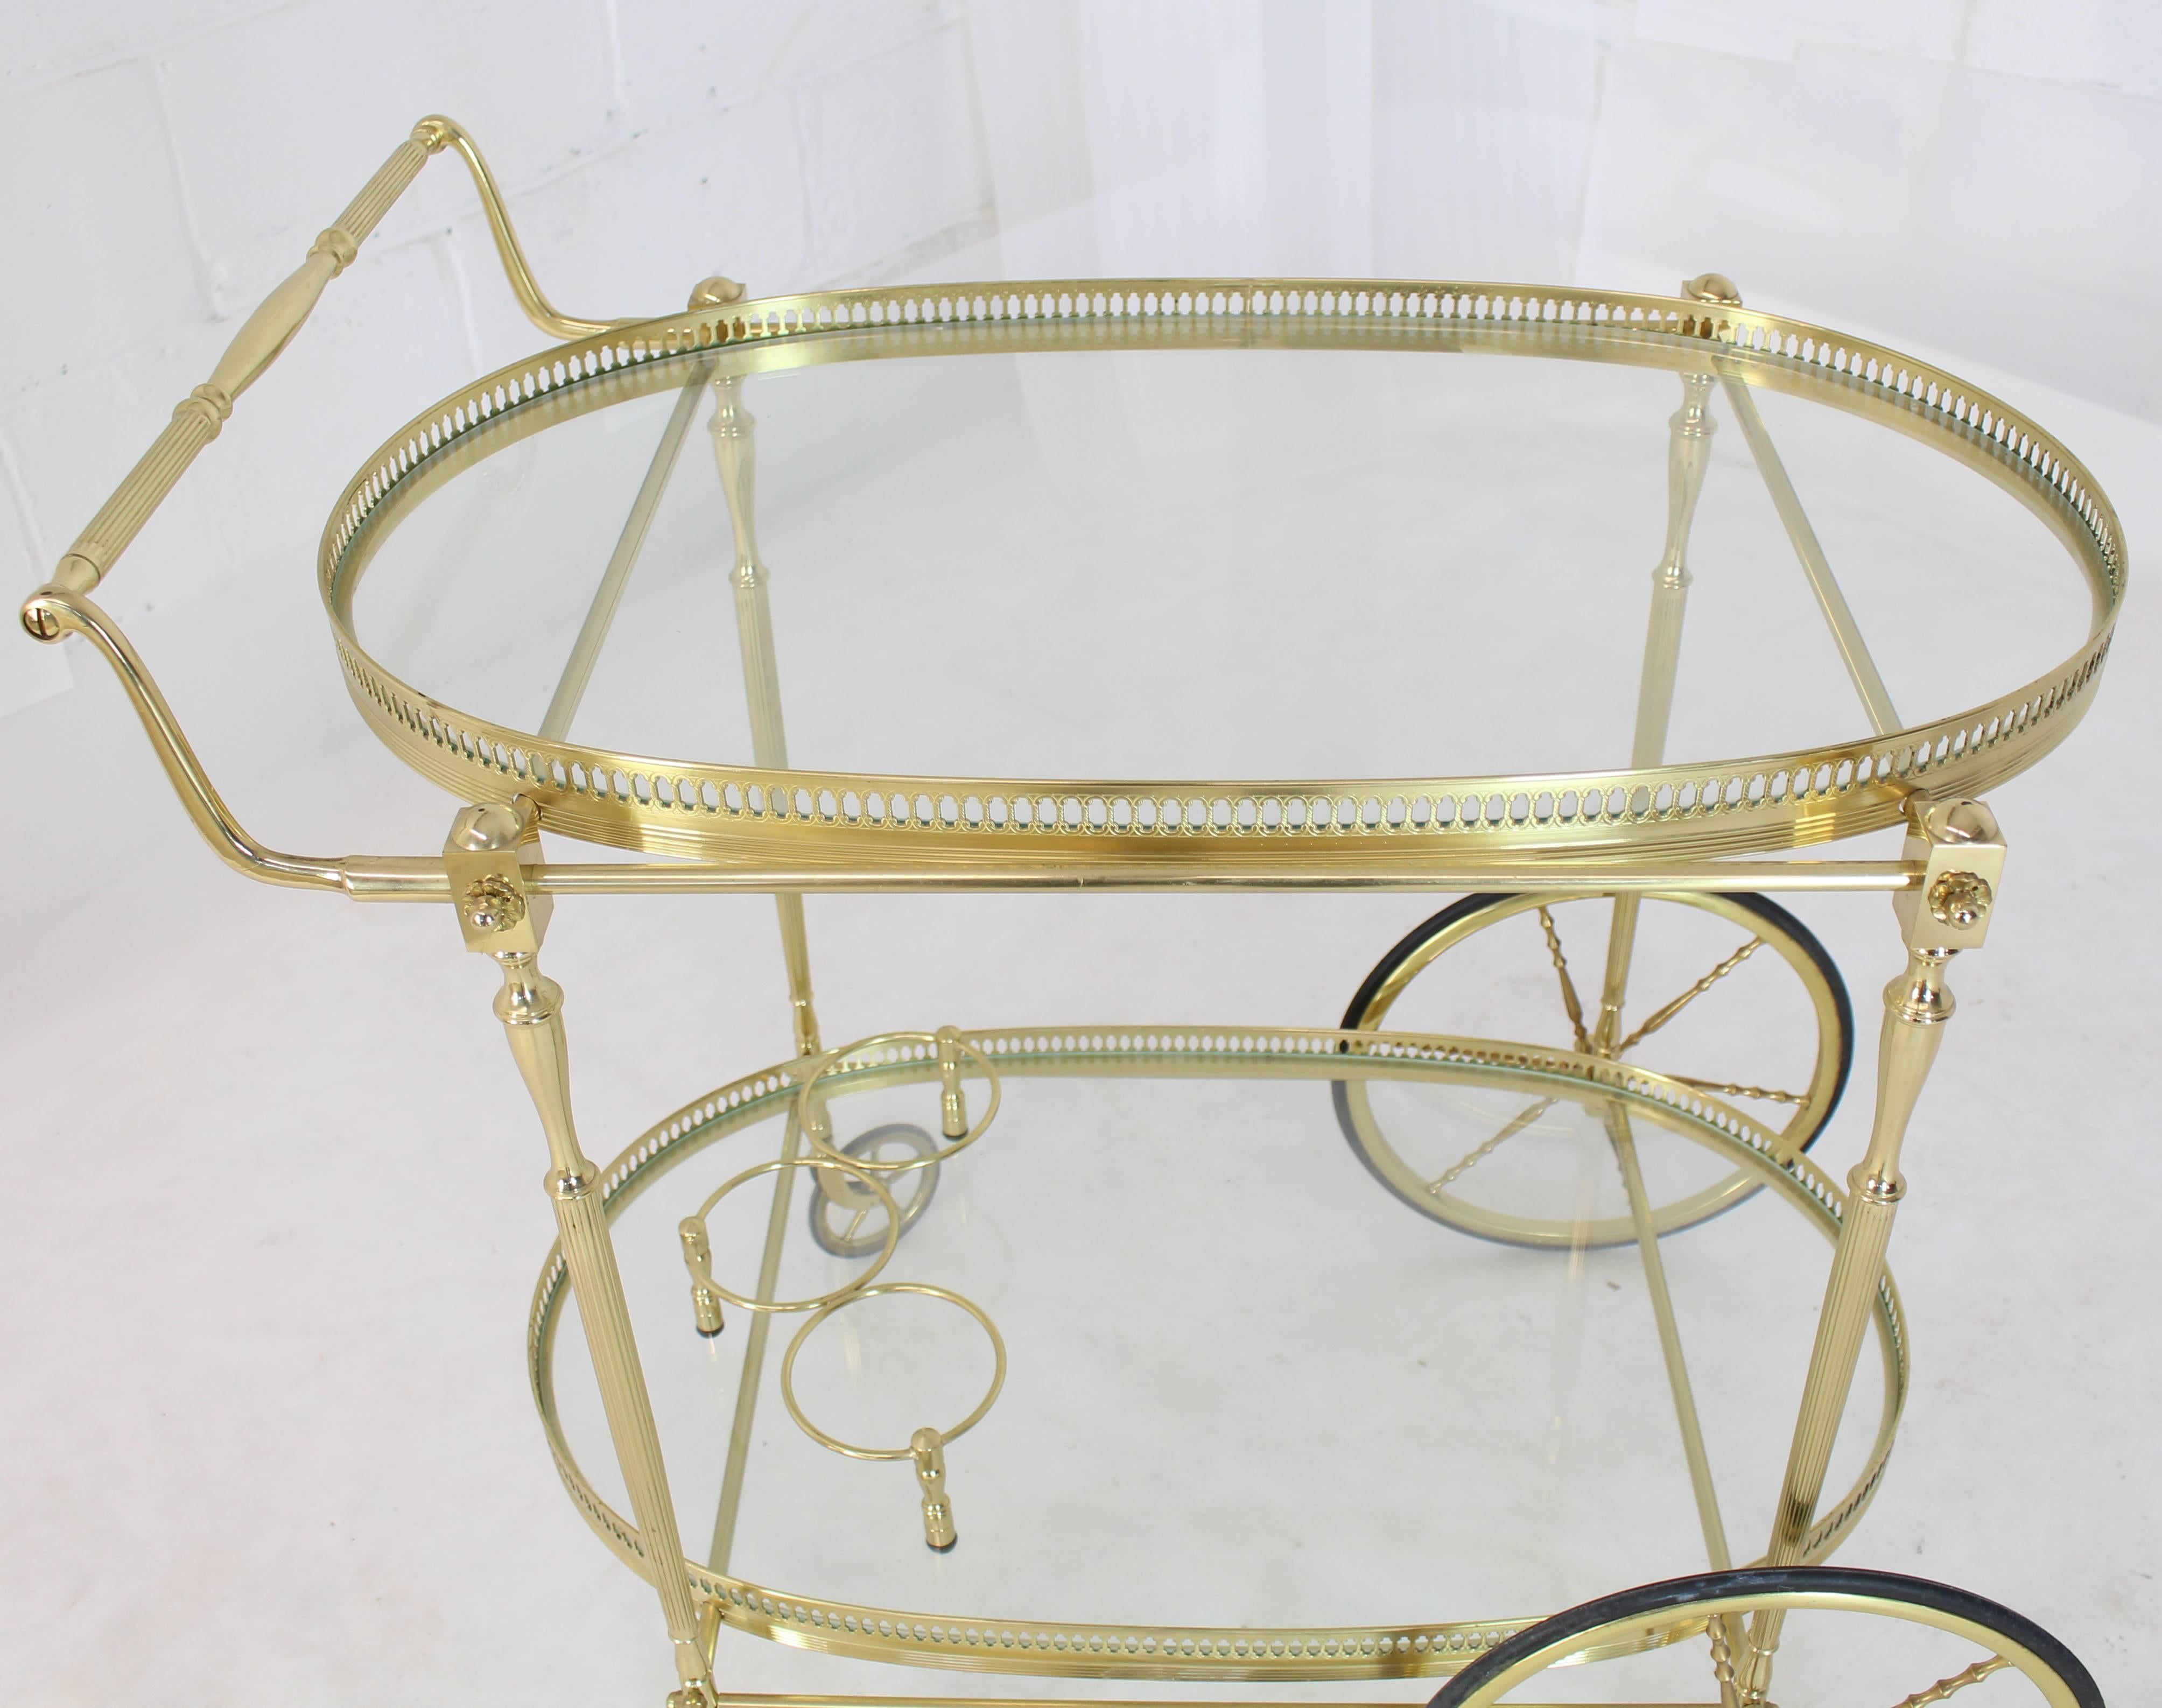 Very sharp looking solid brass tea bar cart serving table.